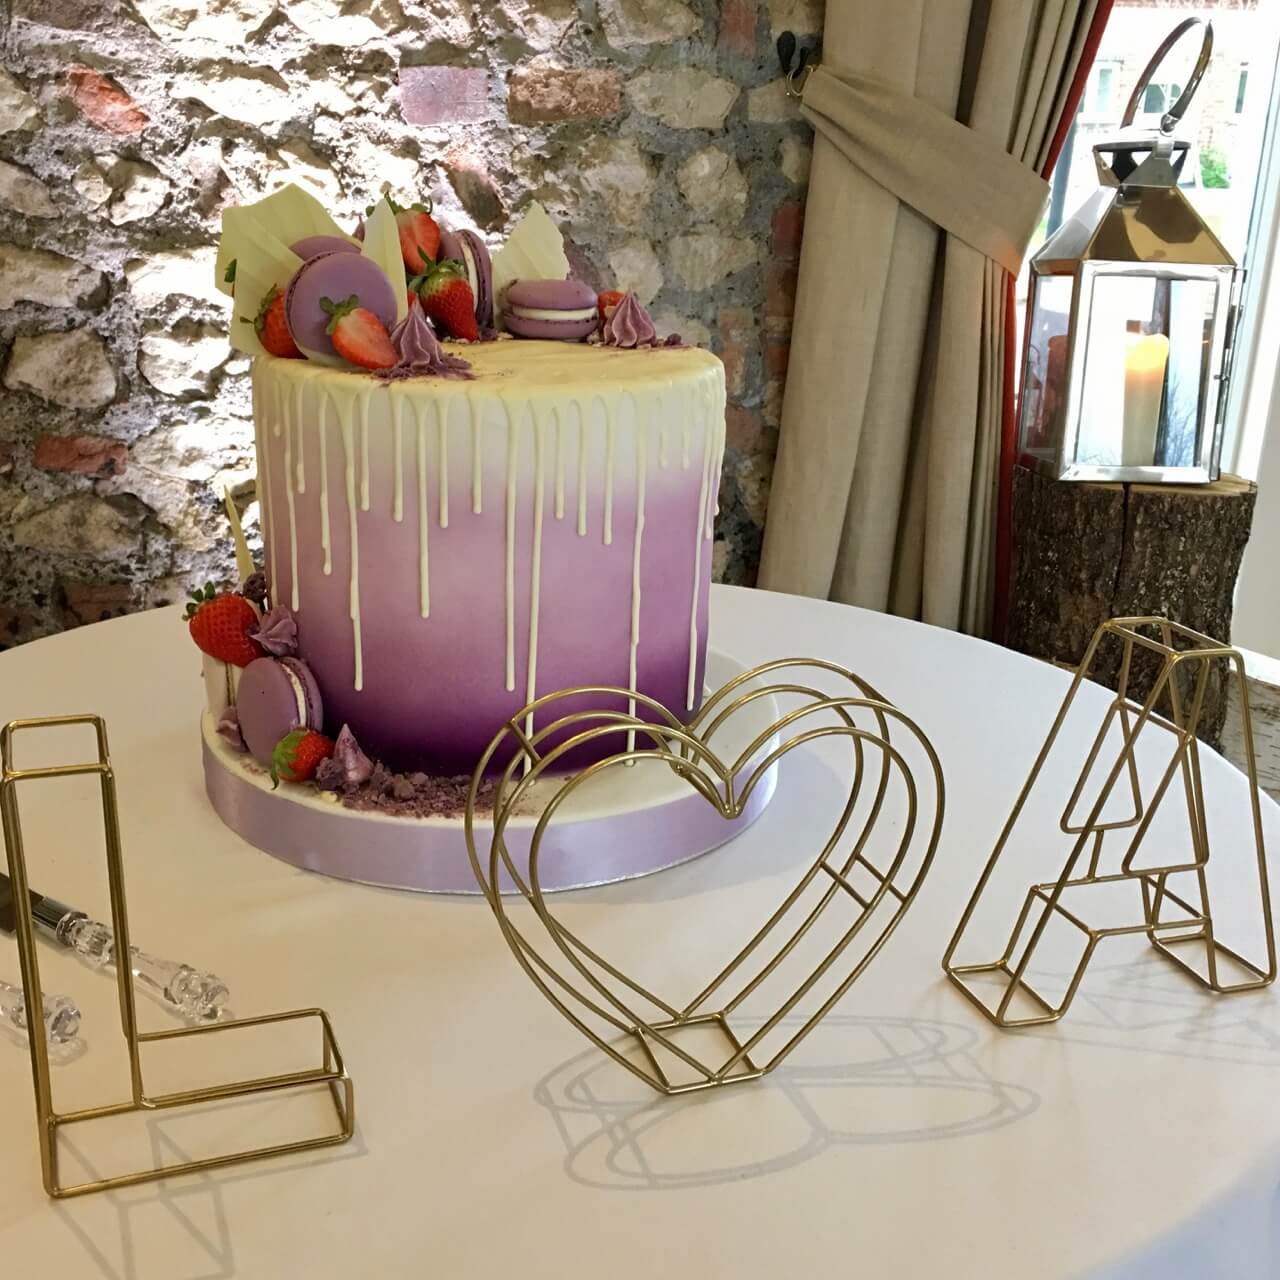 A fabulous wedding cake at Farbridge